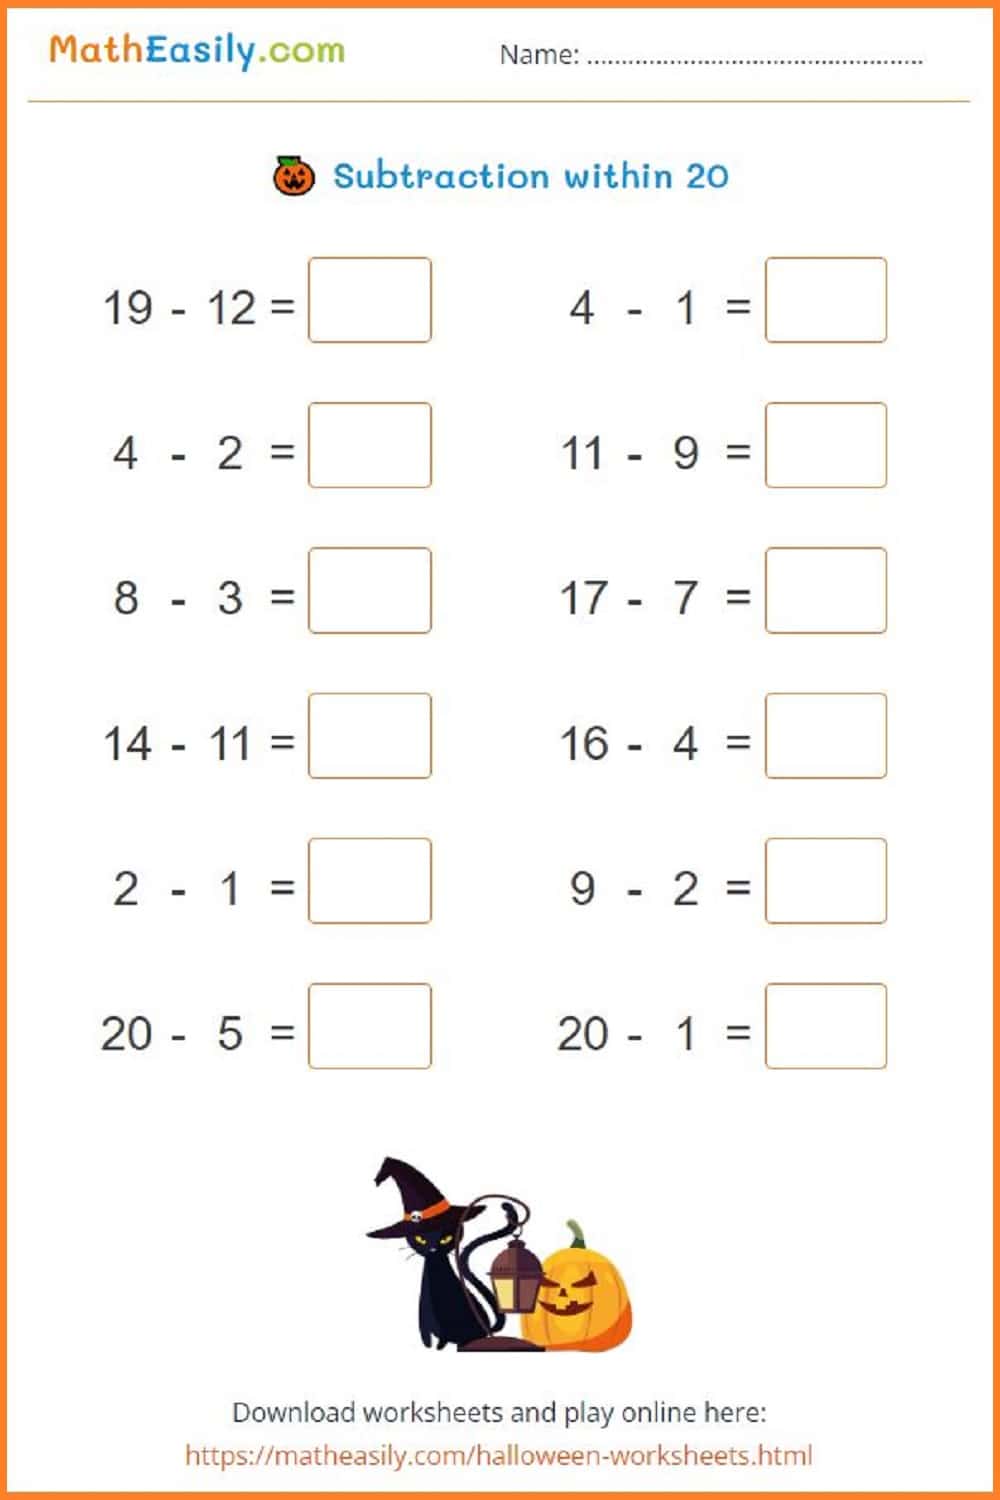 math halloween subtraction worksheets PDF. 
Free printable math Halloween worksheets PDF free download. Free halloween math worksheets kindergarten.